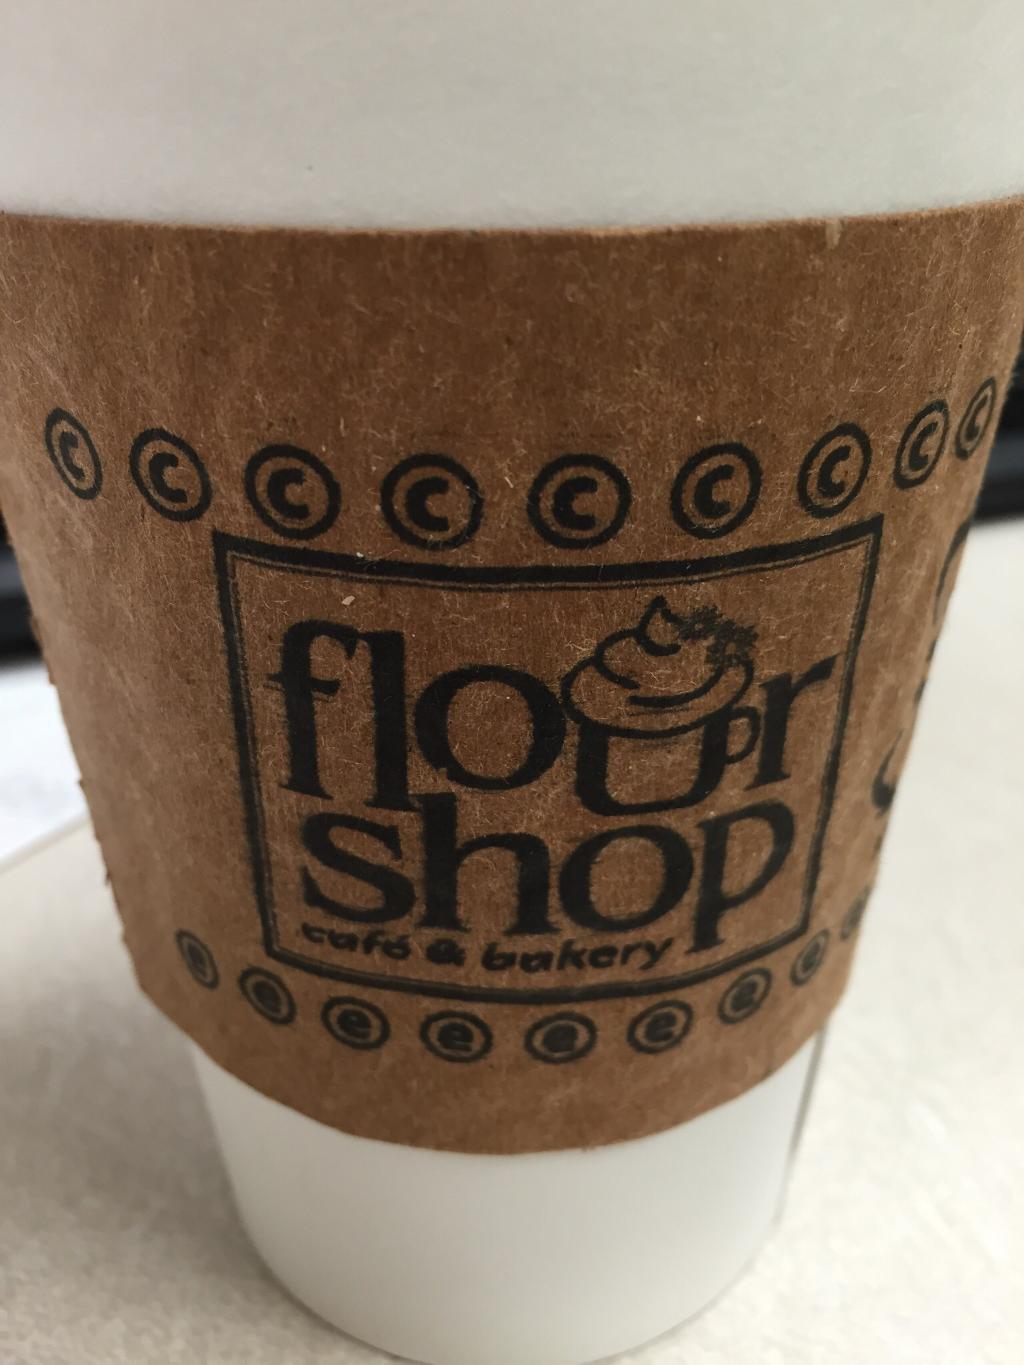 Flour Shop Cafe & Bakery